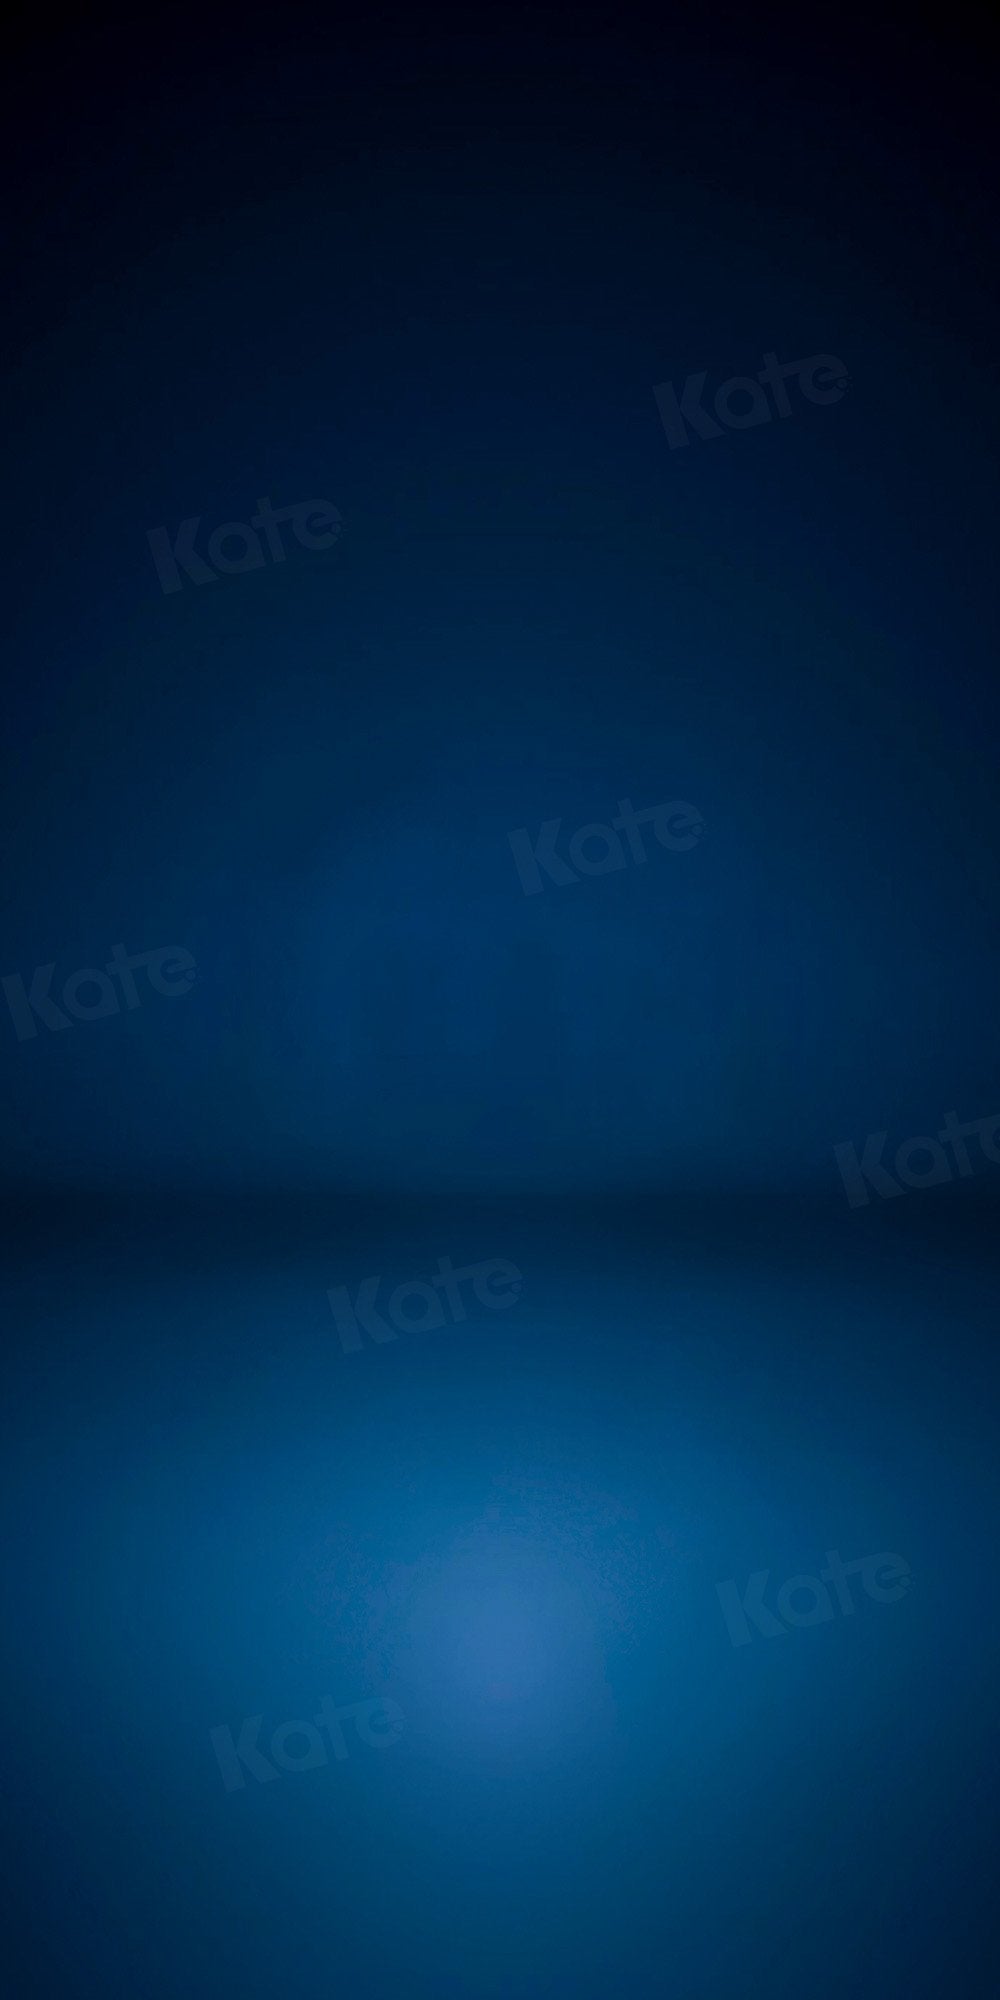 Kate抽象的な青い背景ファインアート